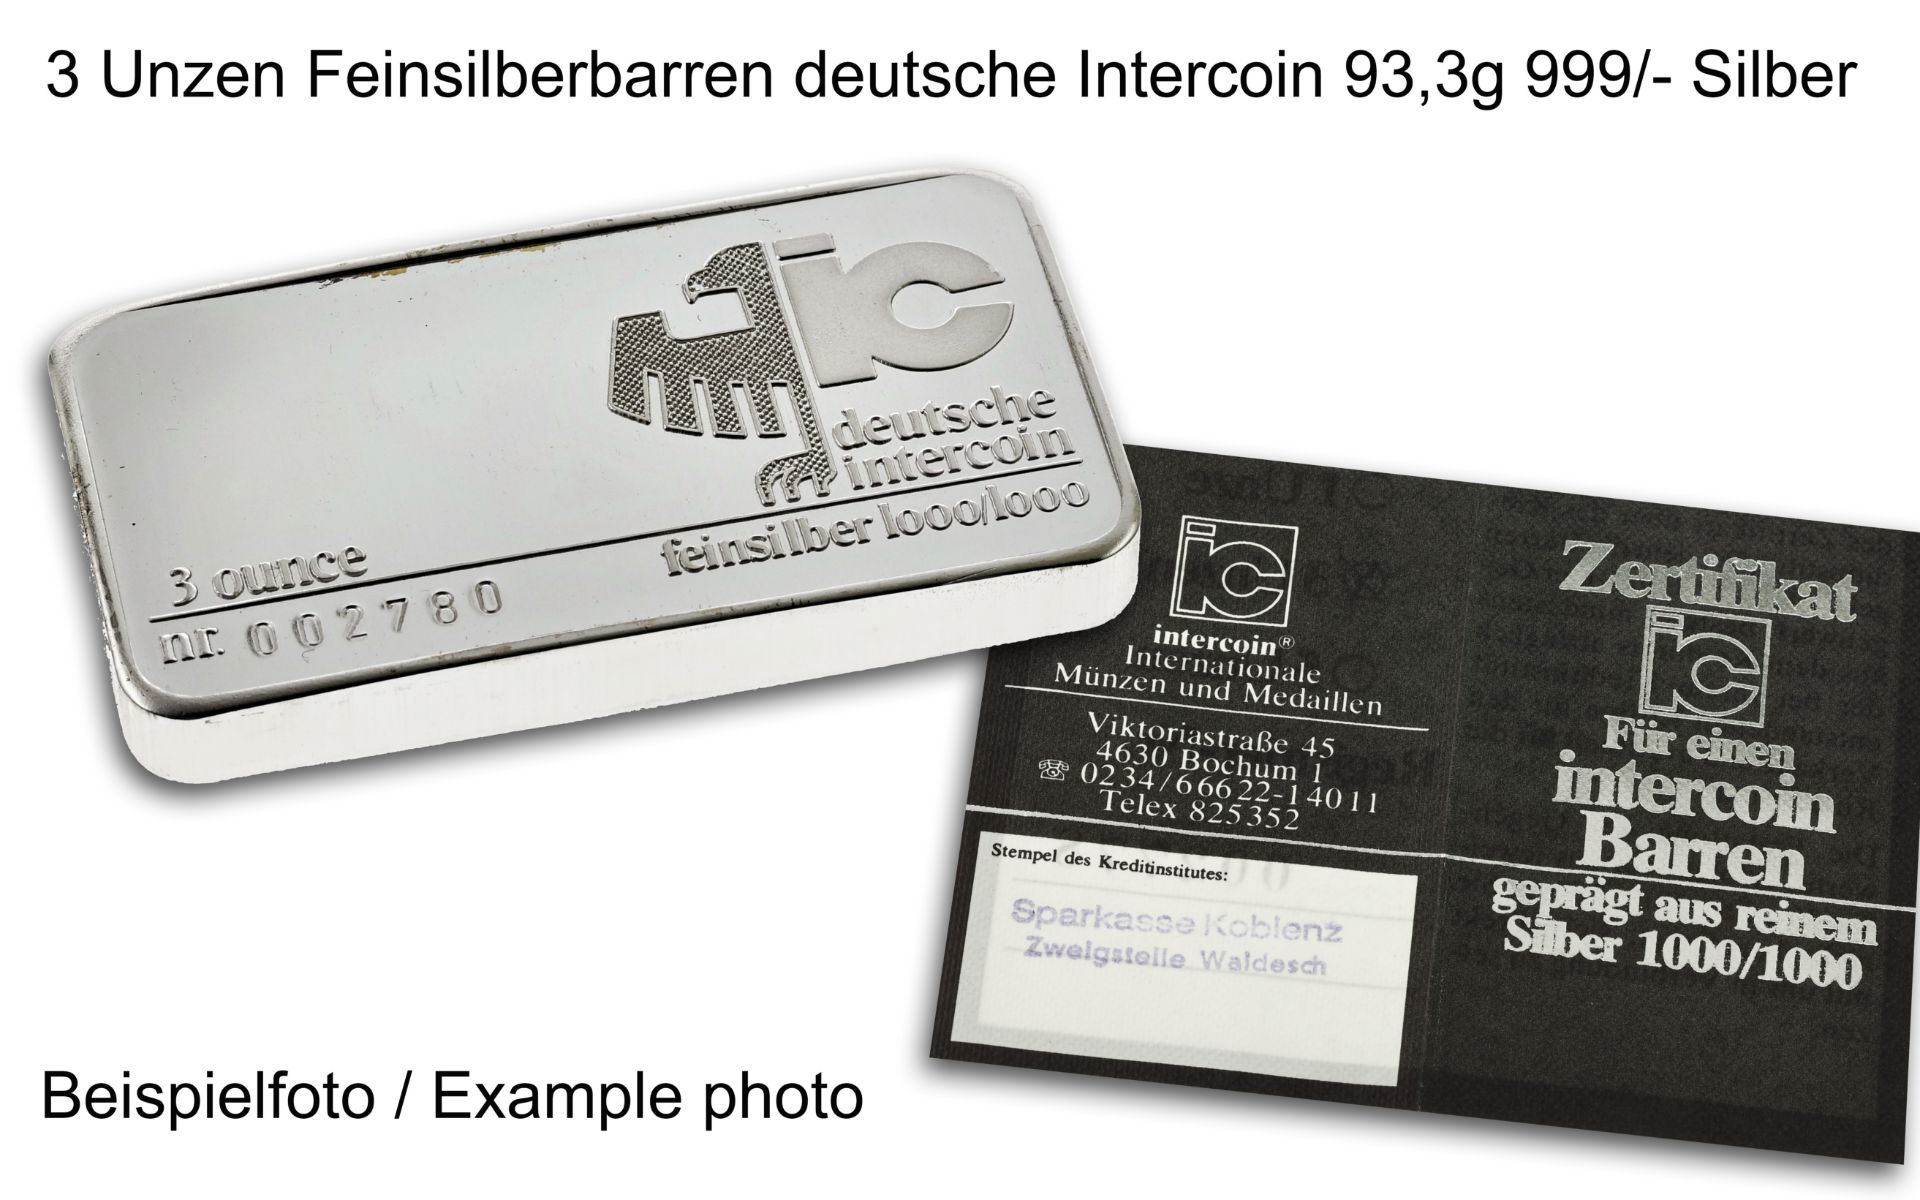 3 Unzen Feinsilberbarren deutsche Intercoin 93,3g 999/- Silber